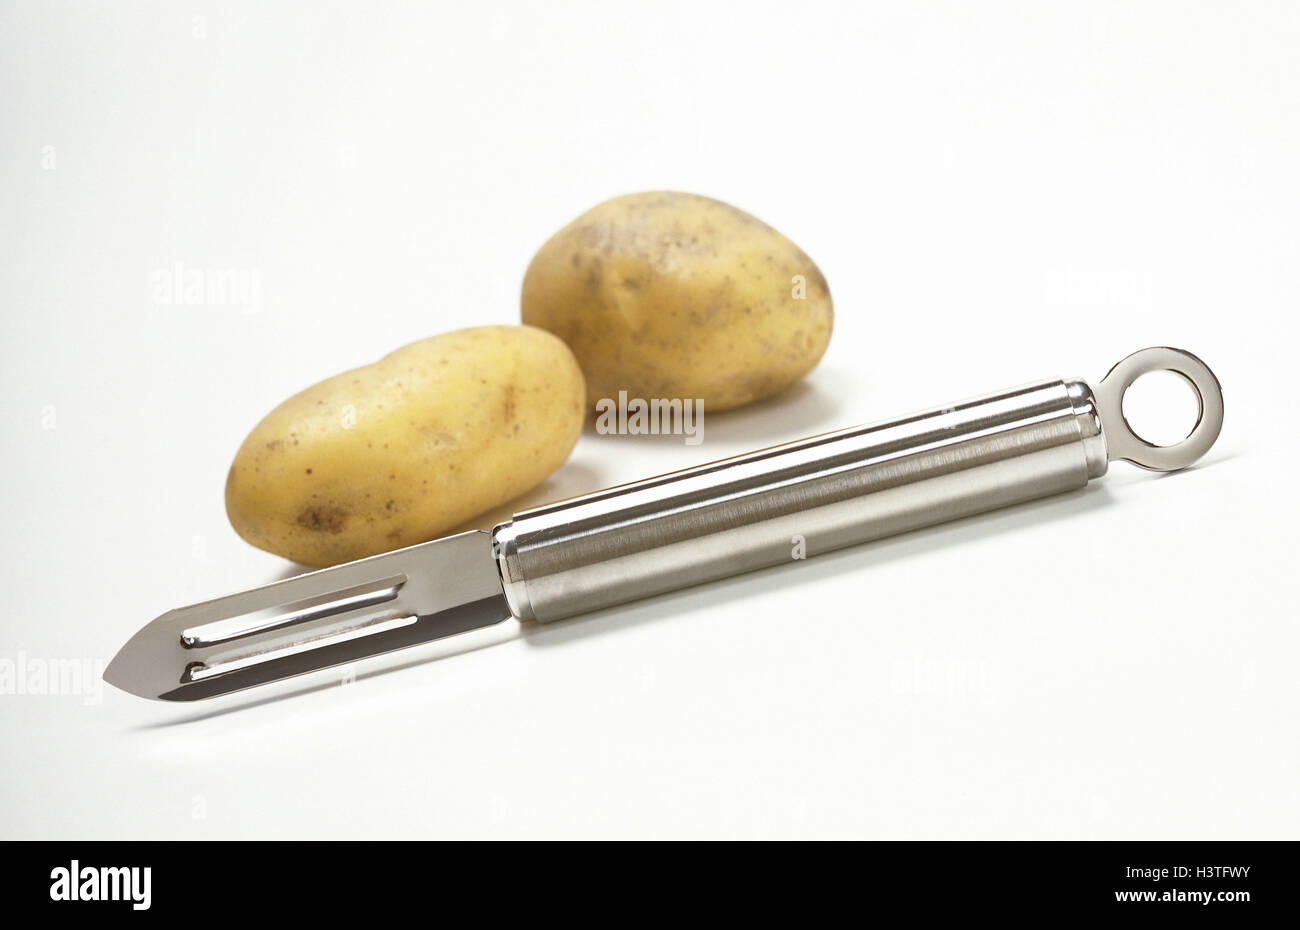 https://c8.alamy.com/comp/H3TFWY/potatoes-gemseschler-kartoffelschler-peel-vegetables-solanum-tuberosum-H3TFWY.jpg